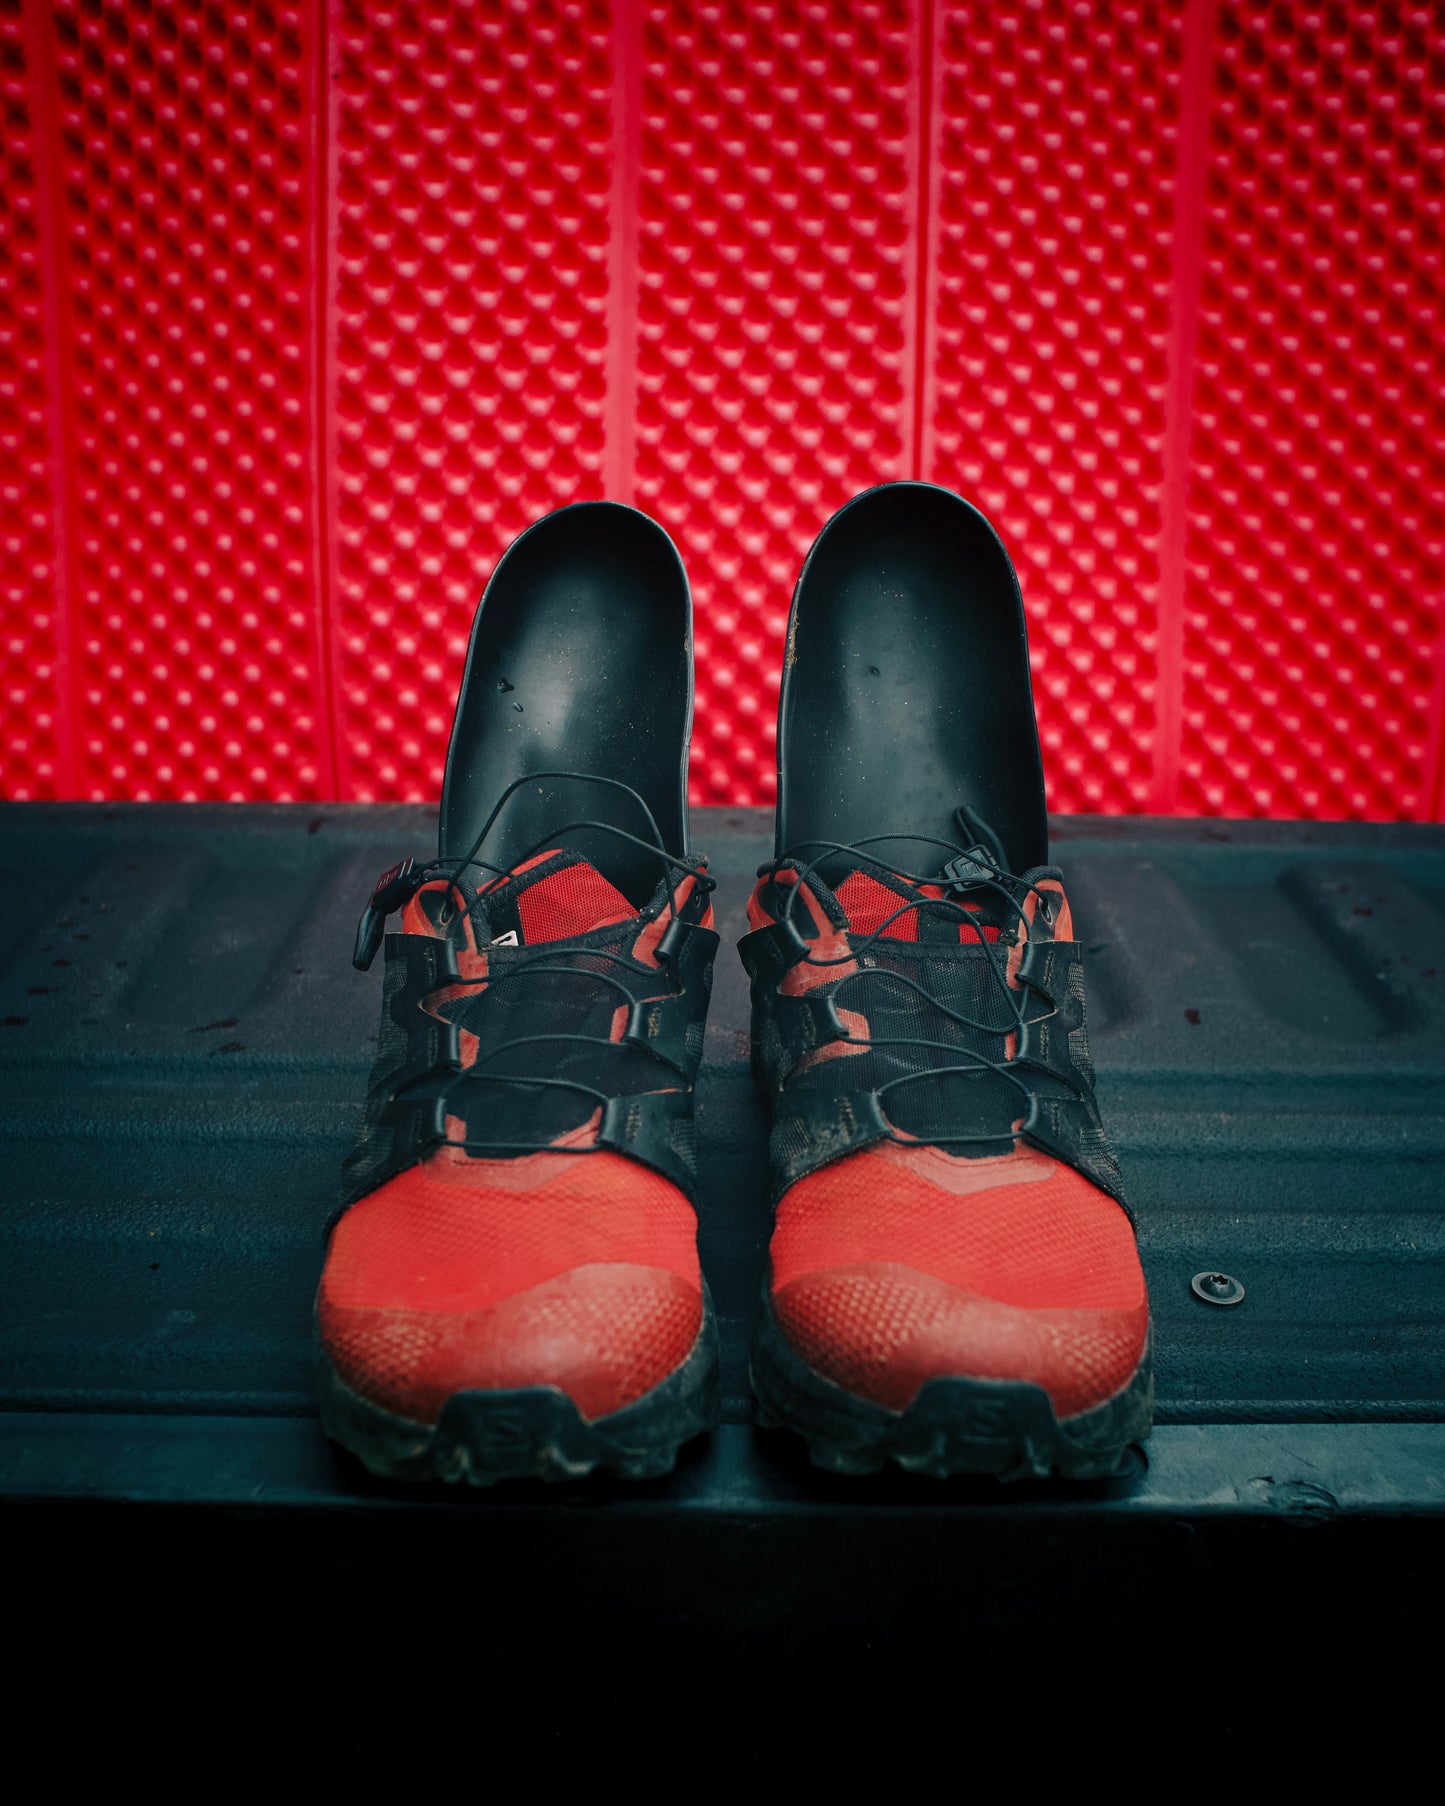 Foot Medic 矫形鞋垫 - Operator 黑色